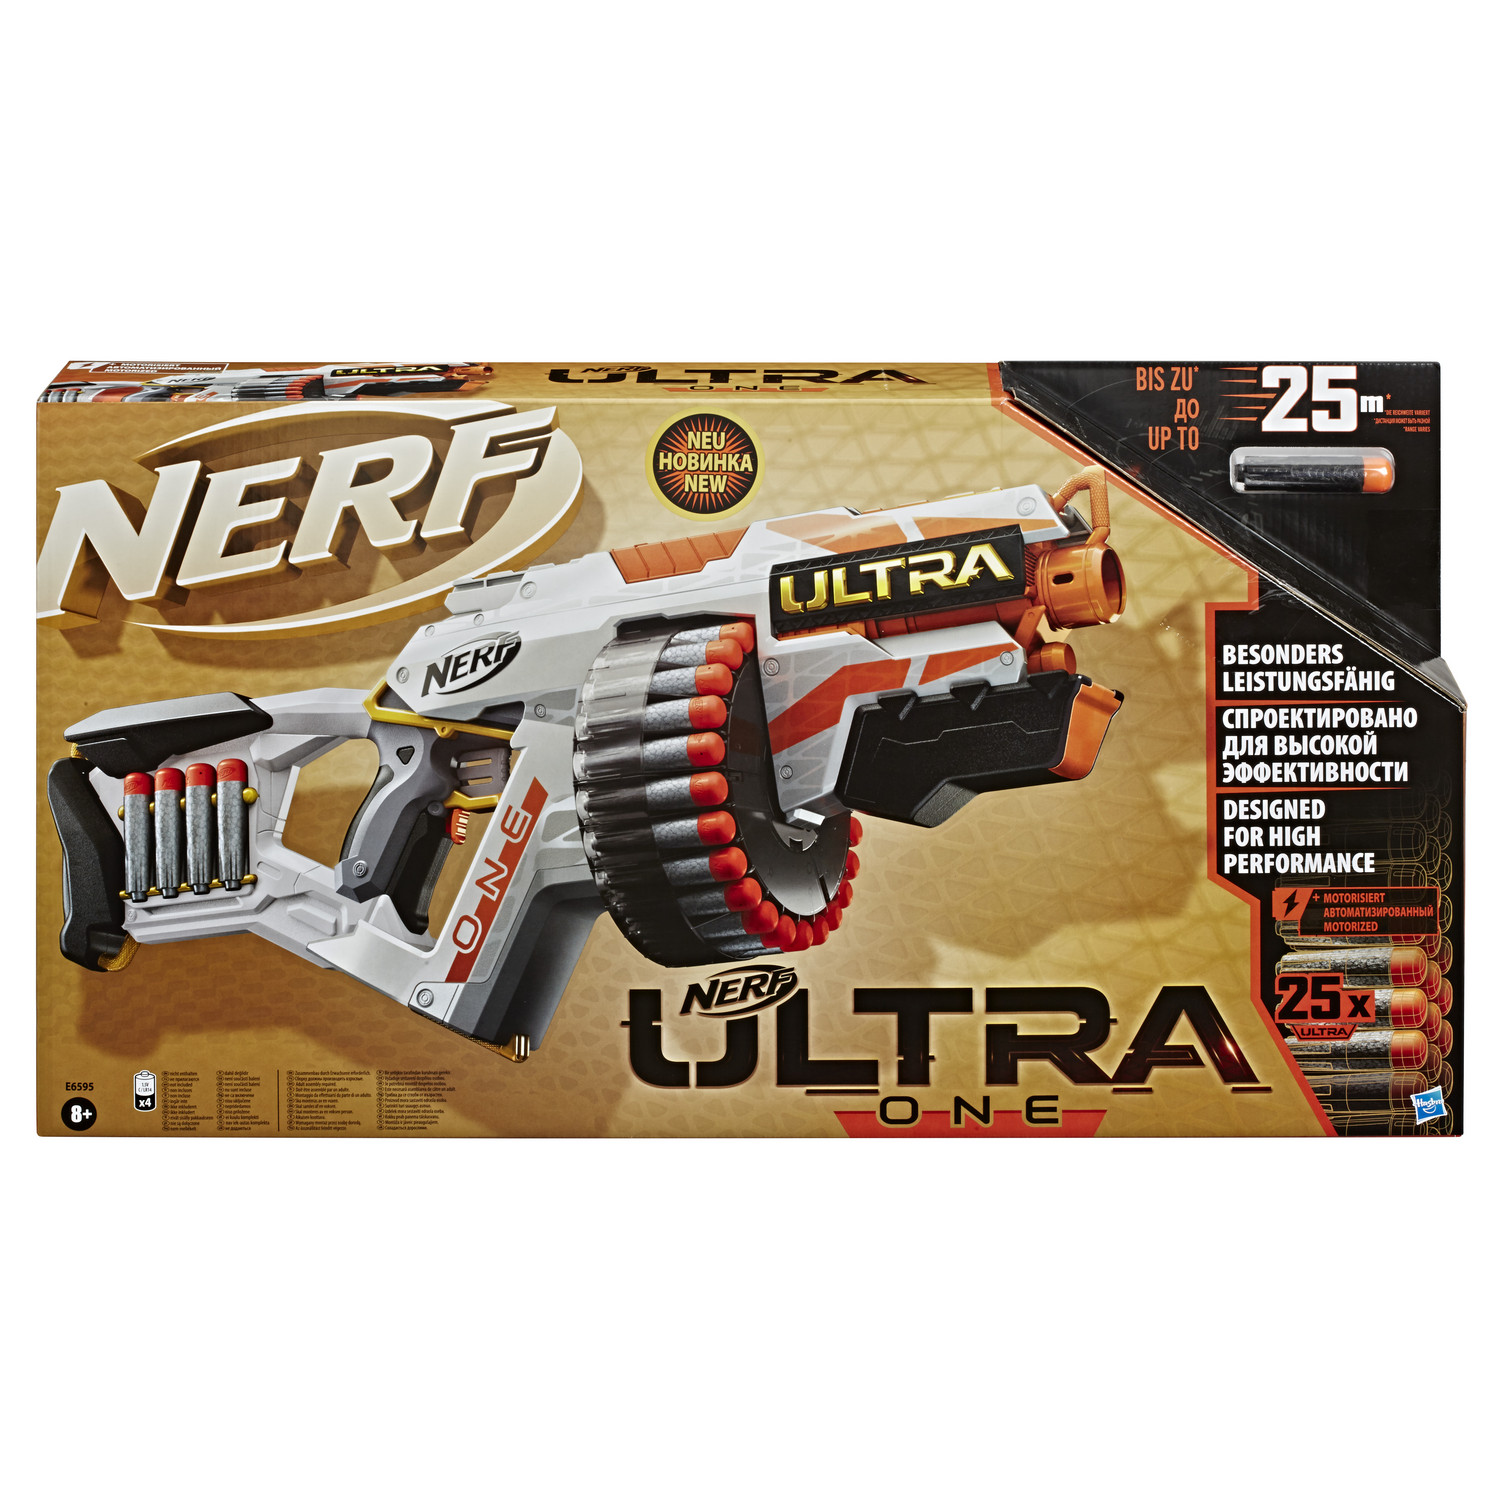 Nerf Игровой набор Ультра One E65953R0 - фото 2